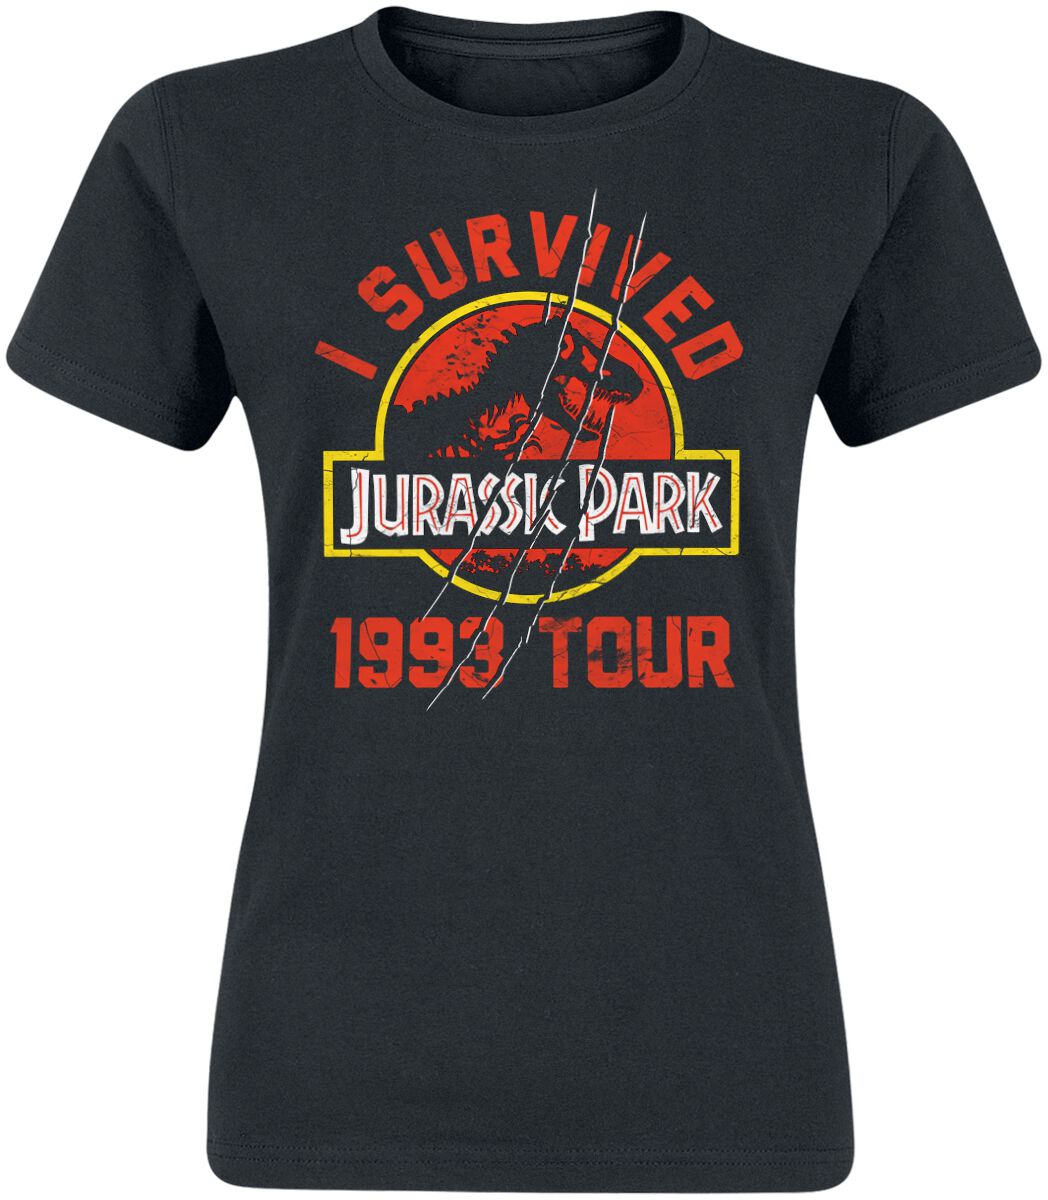 Jurassic Park 1993 - Tour T-Shirt schwarz in L